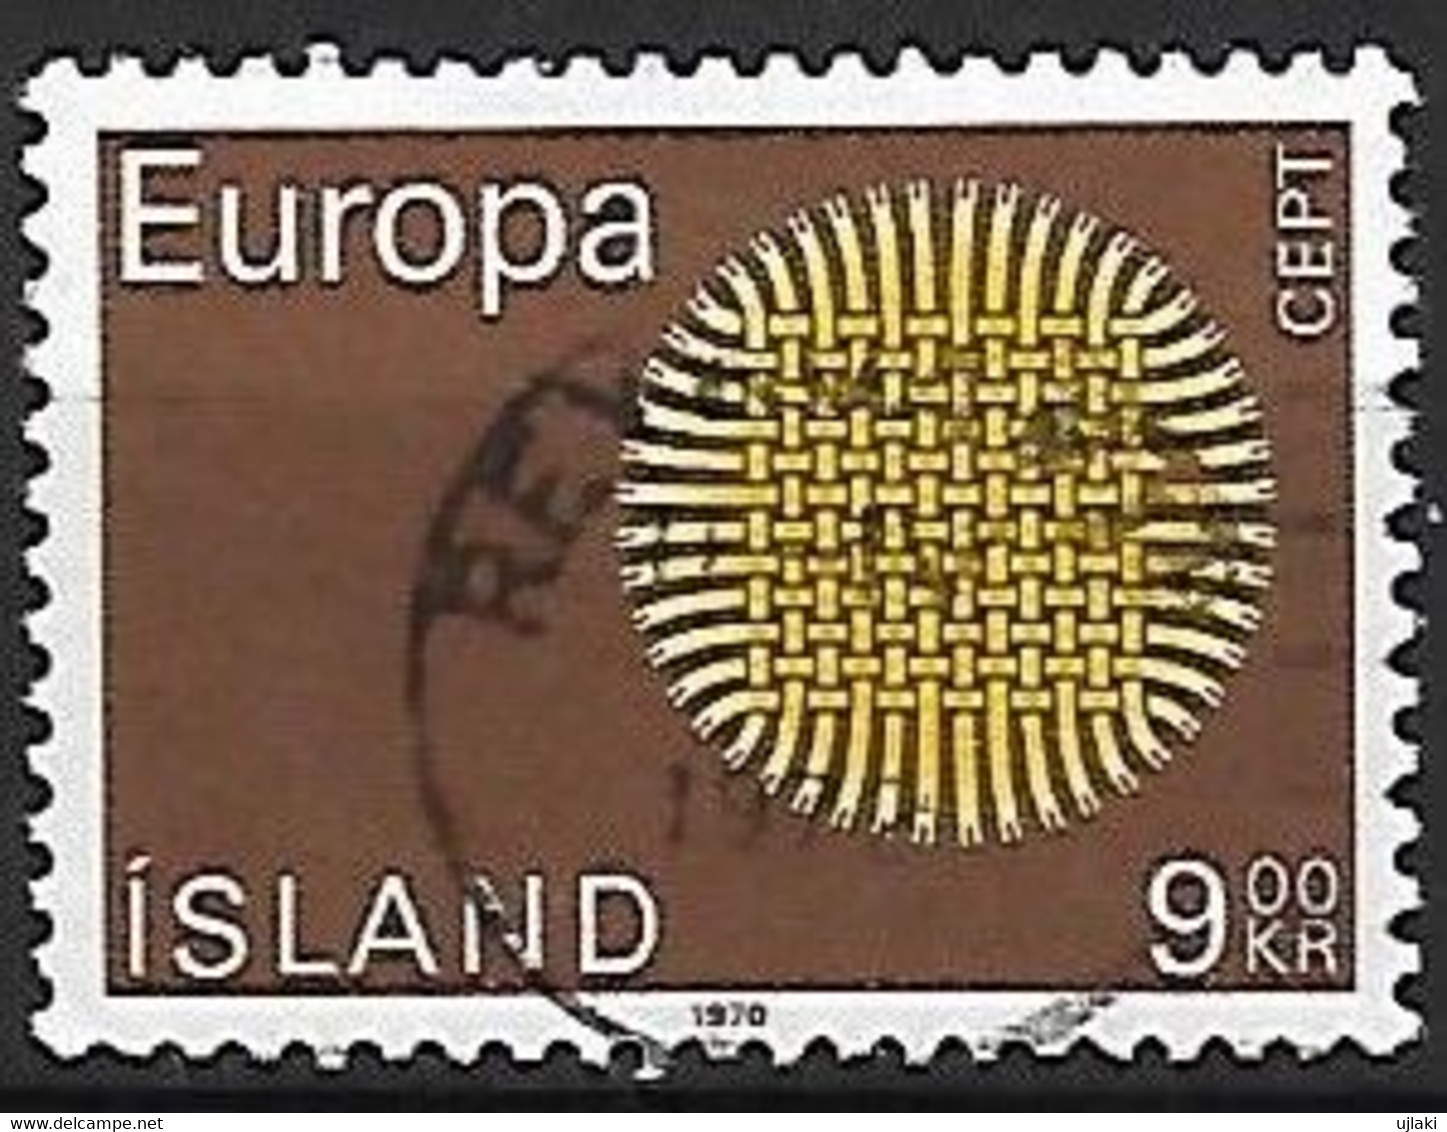 ISLANDE: EUROPA   N°395  Année:1970 - Oblitérés